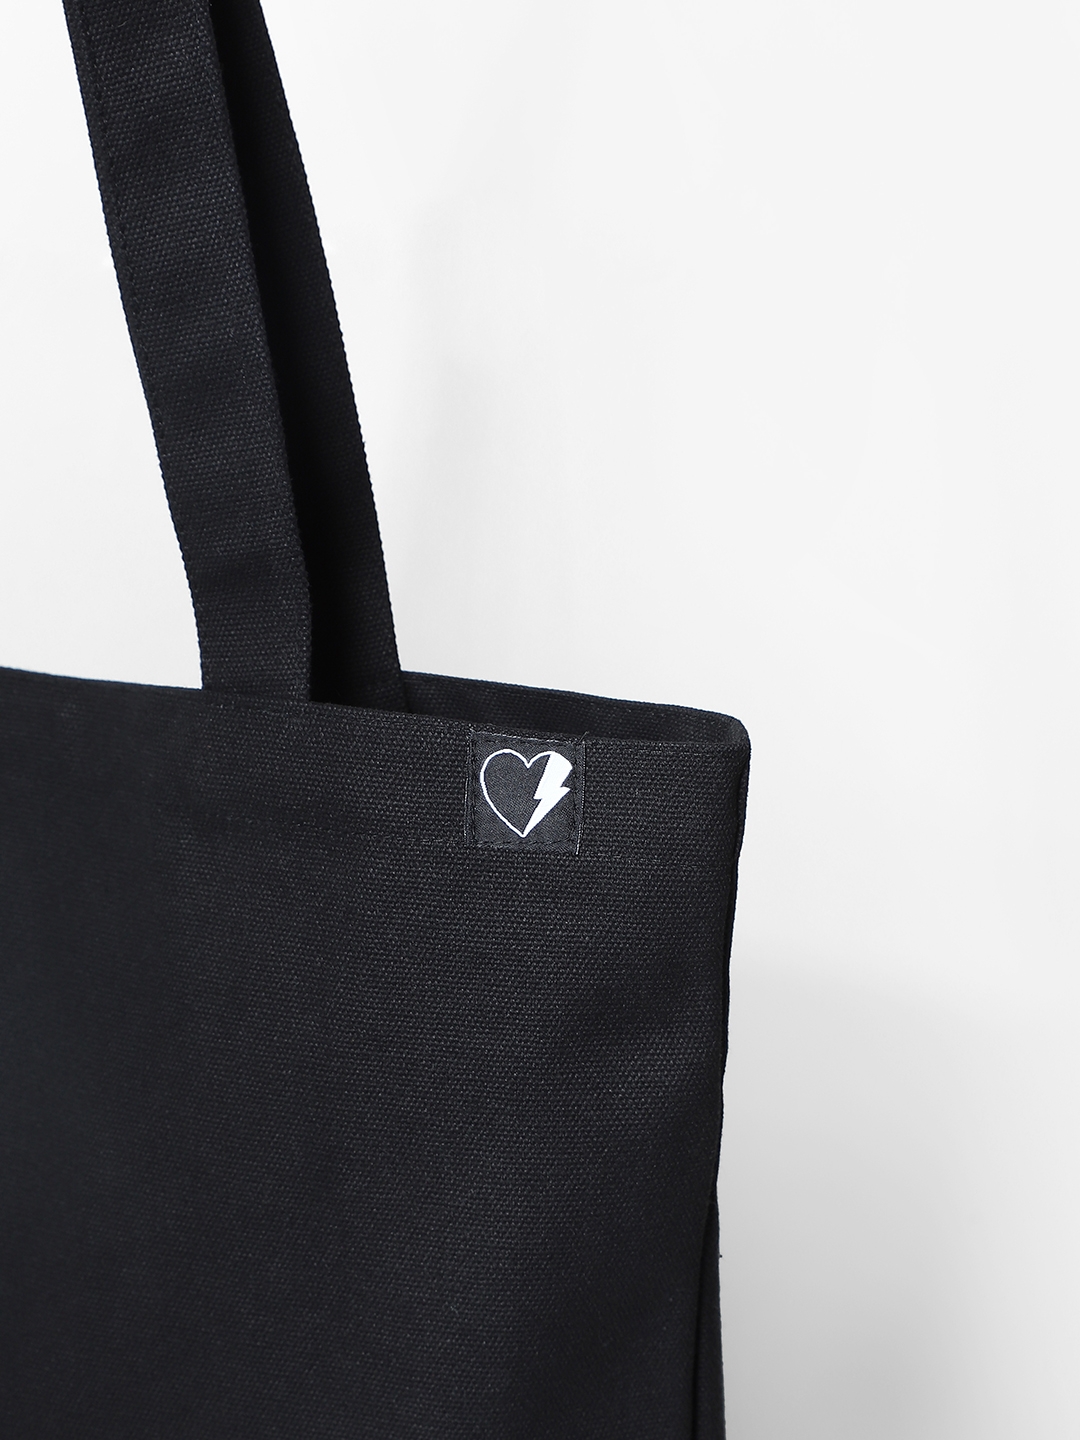 creativeideas.store | Plain Black Tote Bag 2